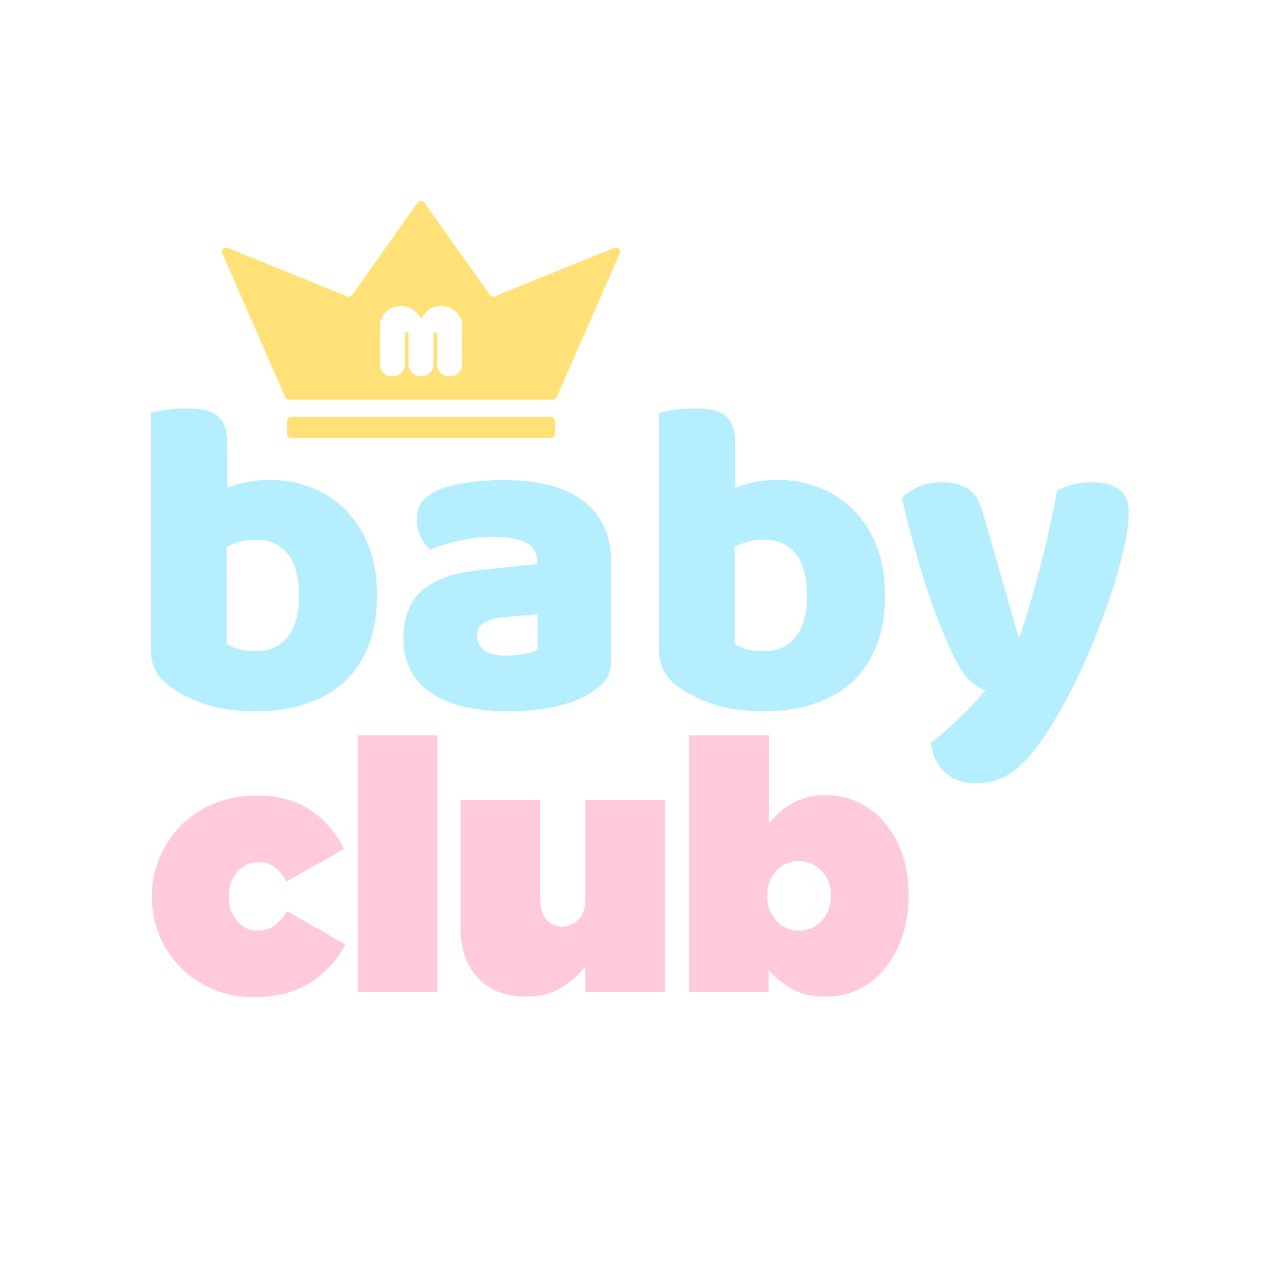 Baby Starter Kit (Pink) with FREE Baby Club Membership - MIKI HOUSE USA